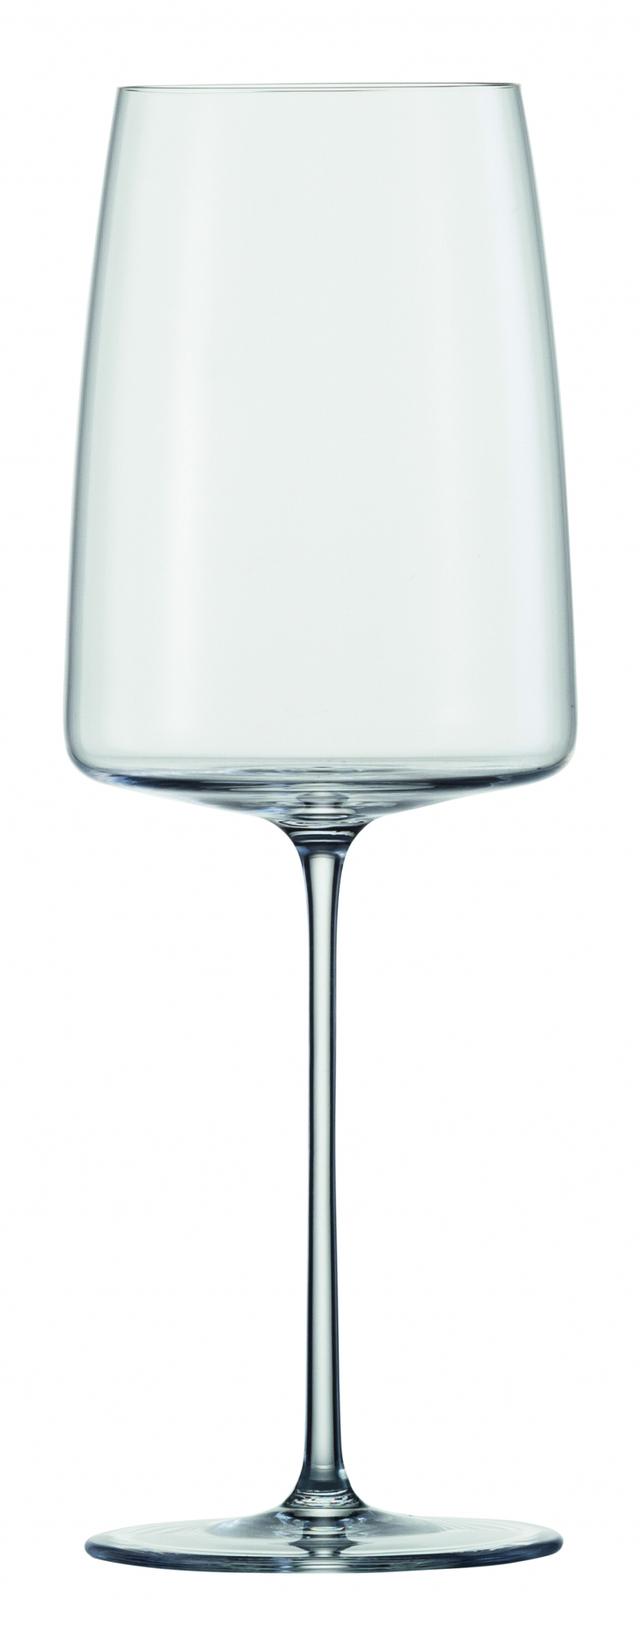 zwiesel glas simplify wijnglas light & fresh 2 - 0.382 ltr - geschenkverpakking 2 glazen